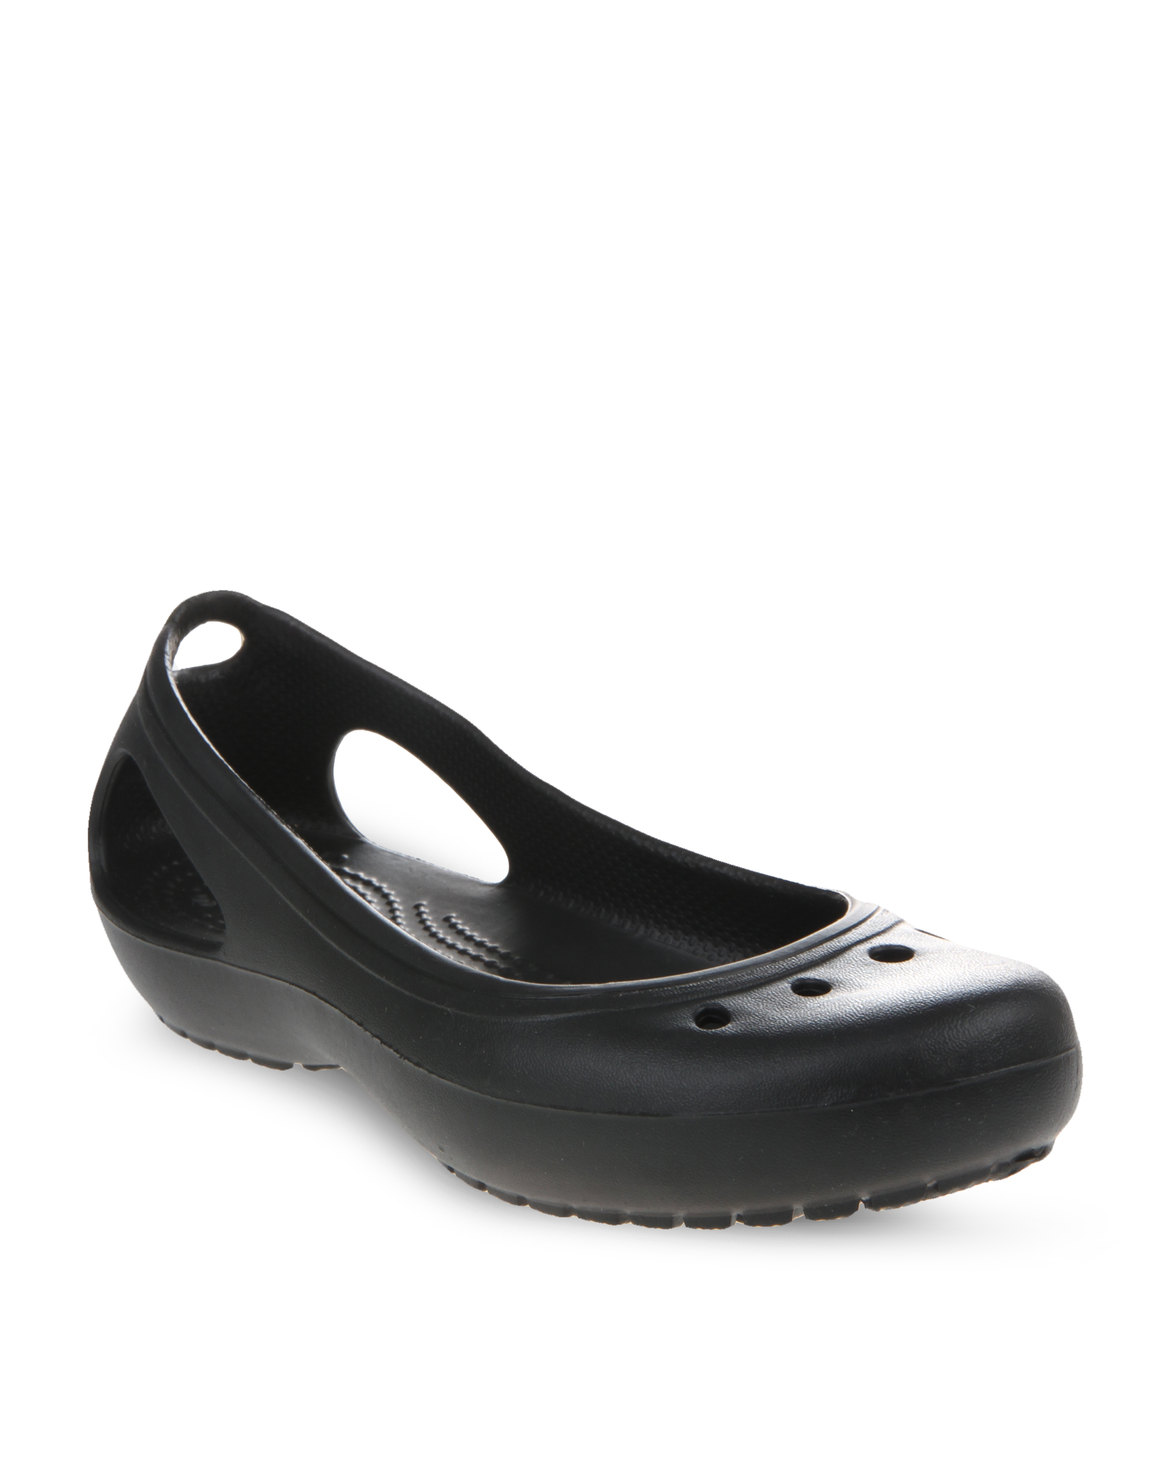 Crocs Kadee Flat Shoes Black | Zando